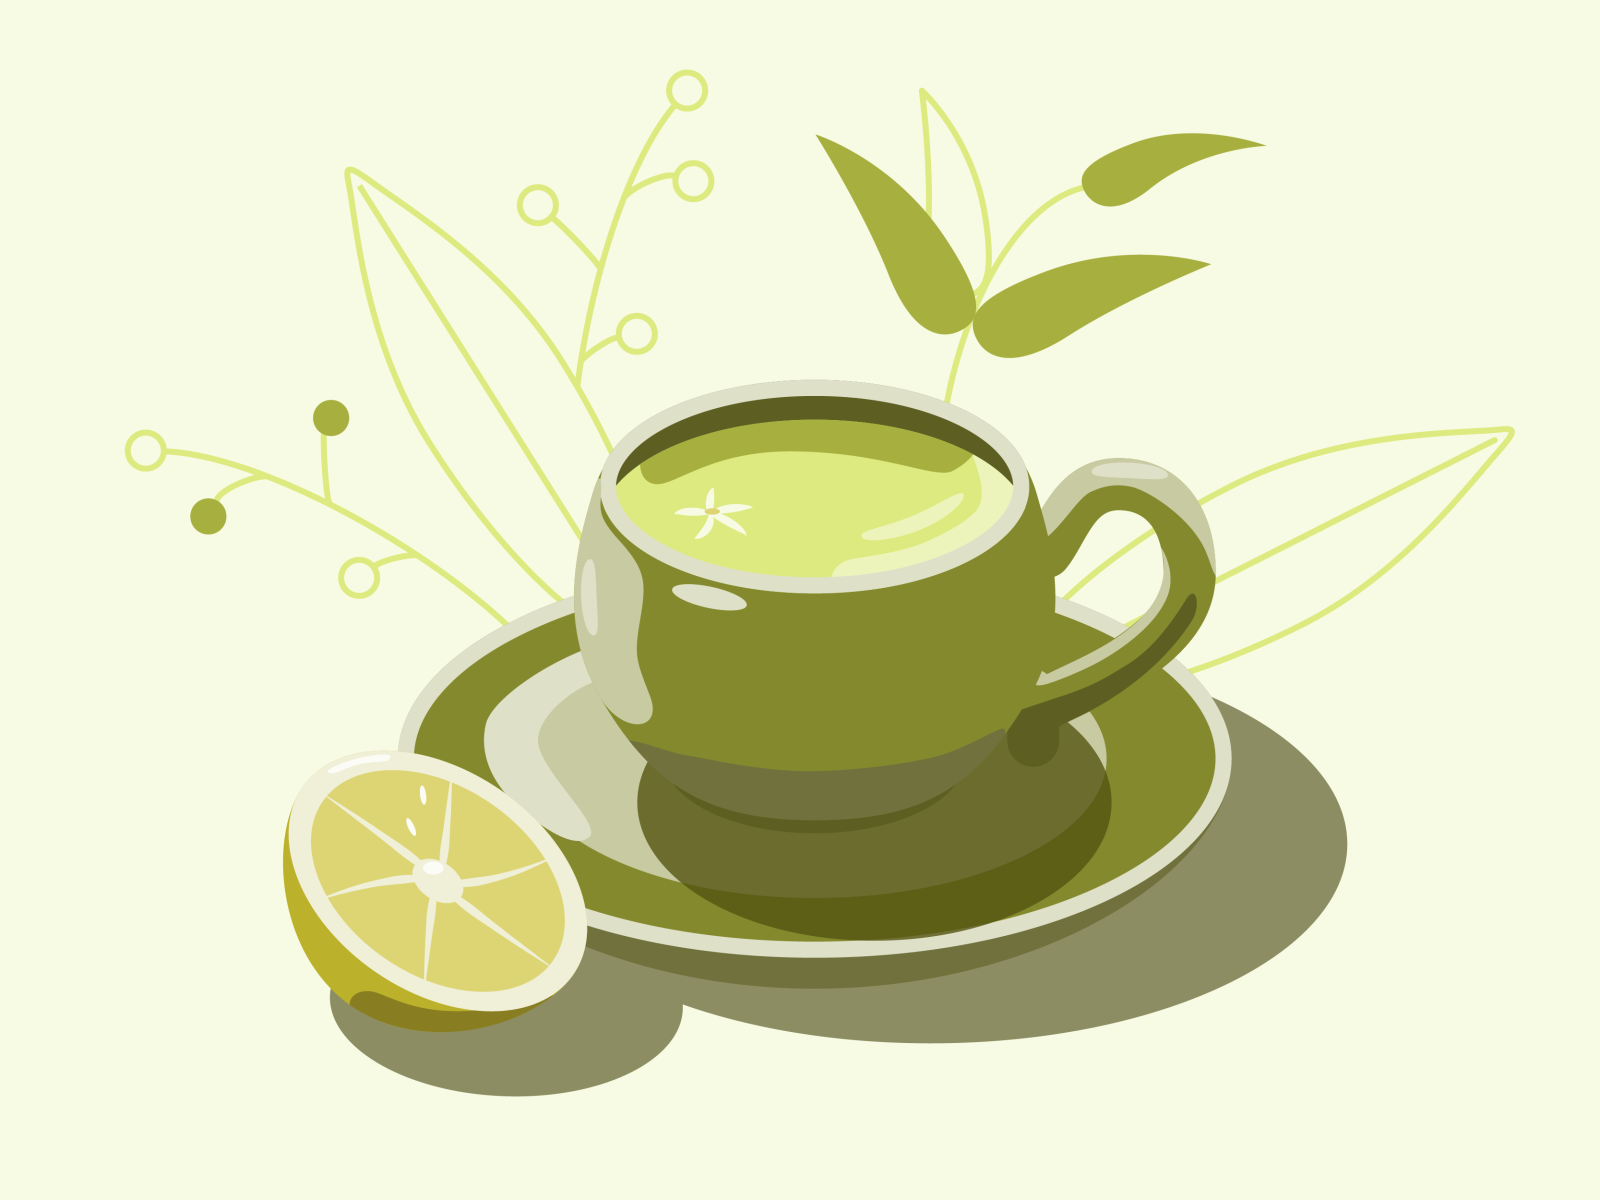 Is green tea good for health?